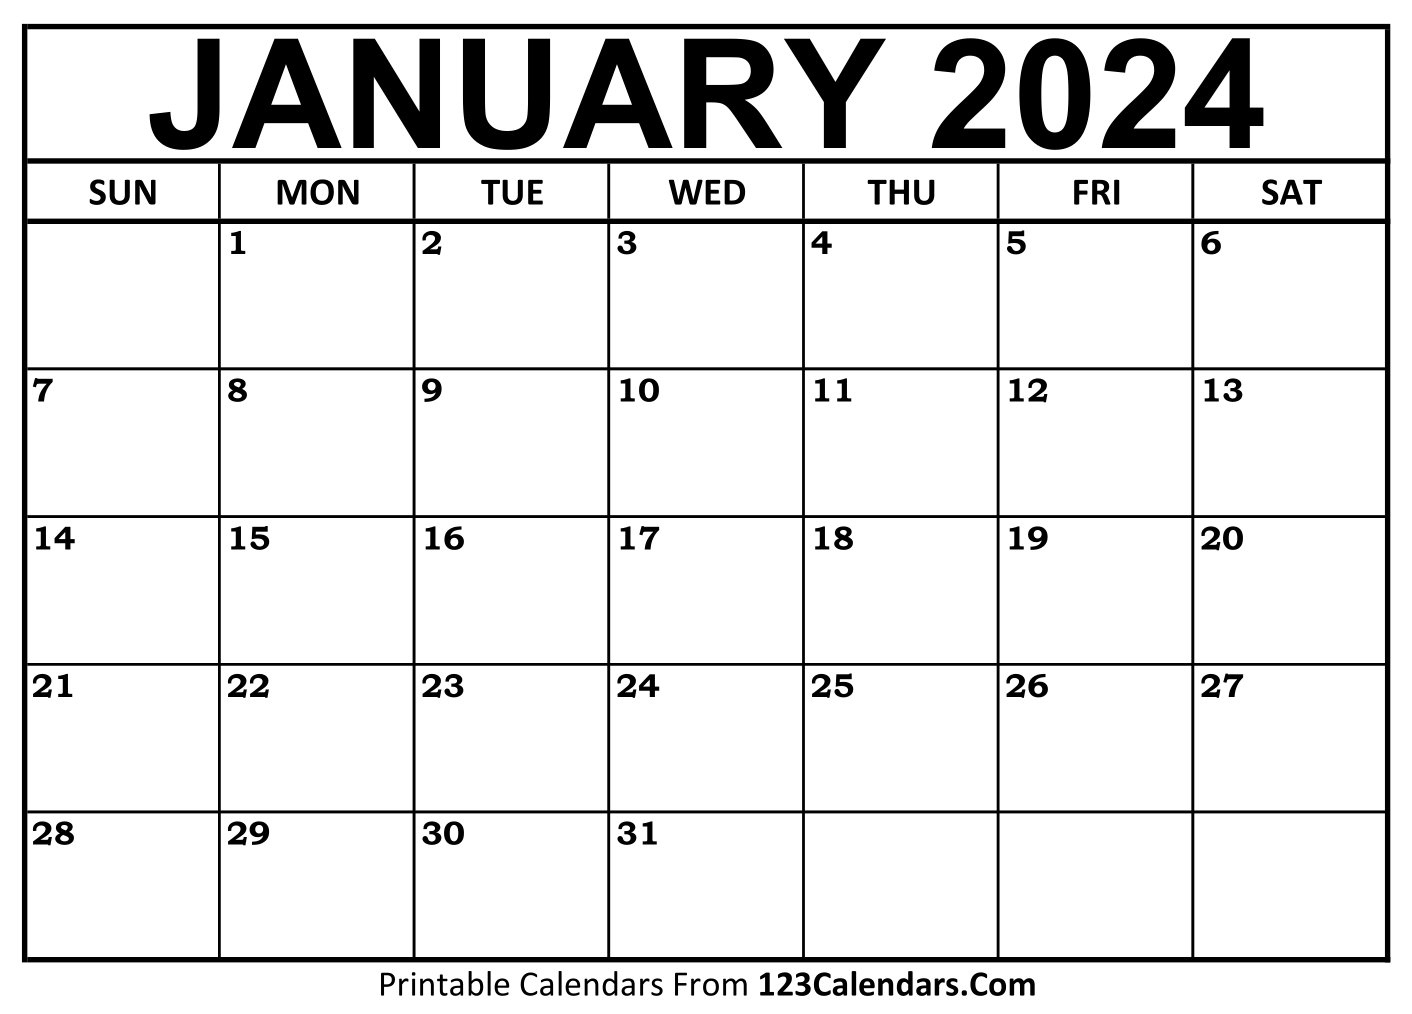 Printable January 2024 Calendar Templates - 123Calendars | Blank Printable Calendar 2024 Free